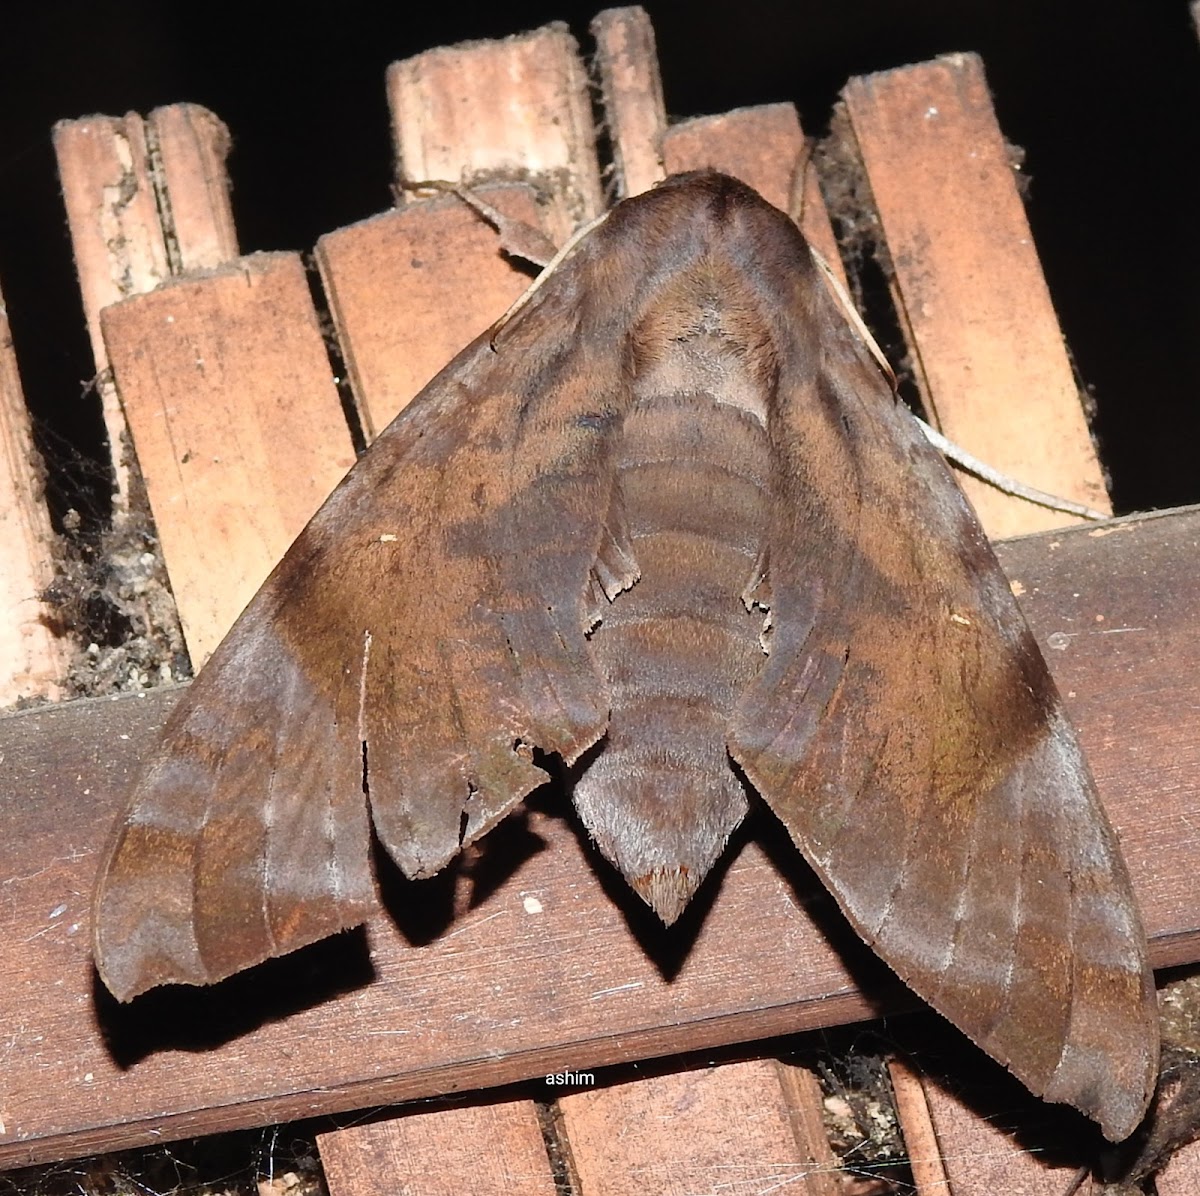 Common Forest Hawk moth